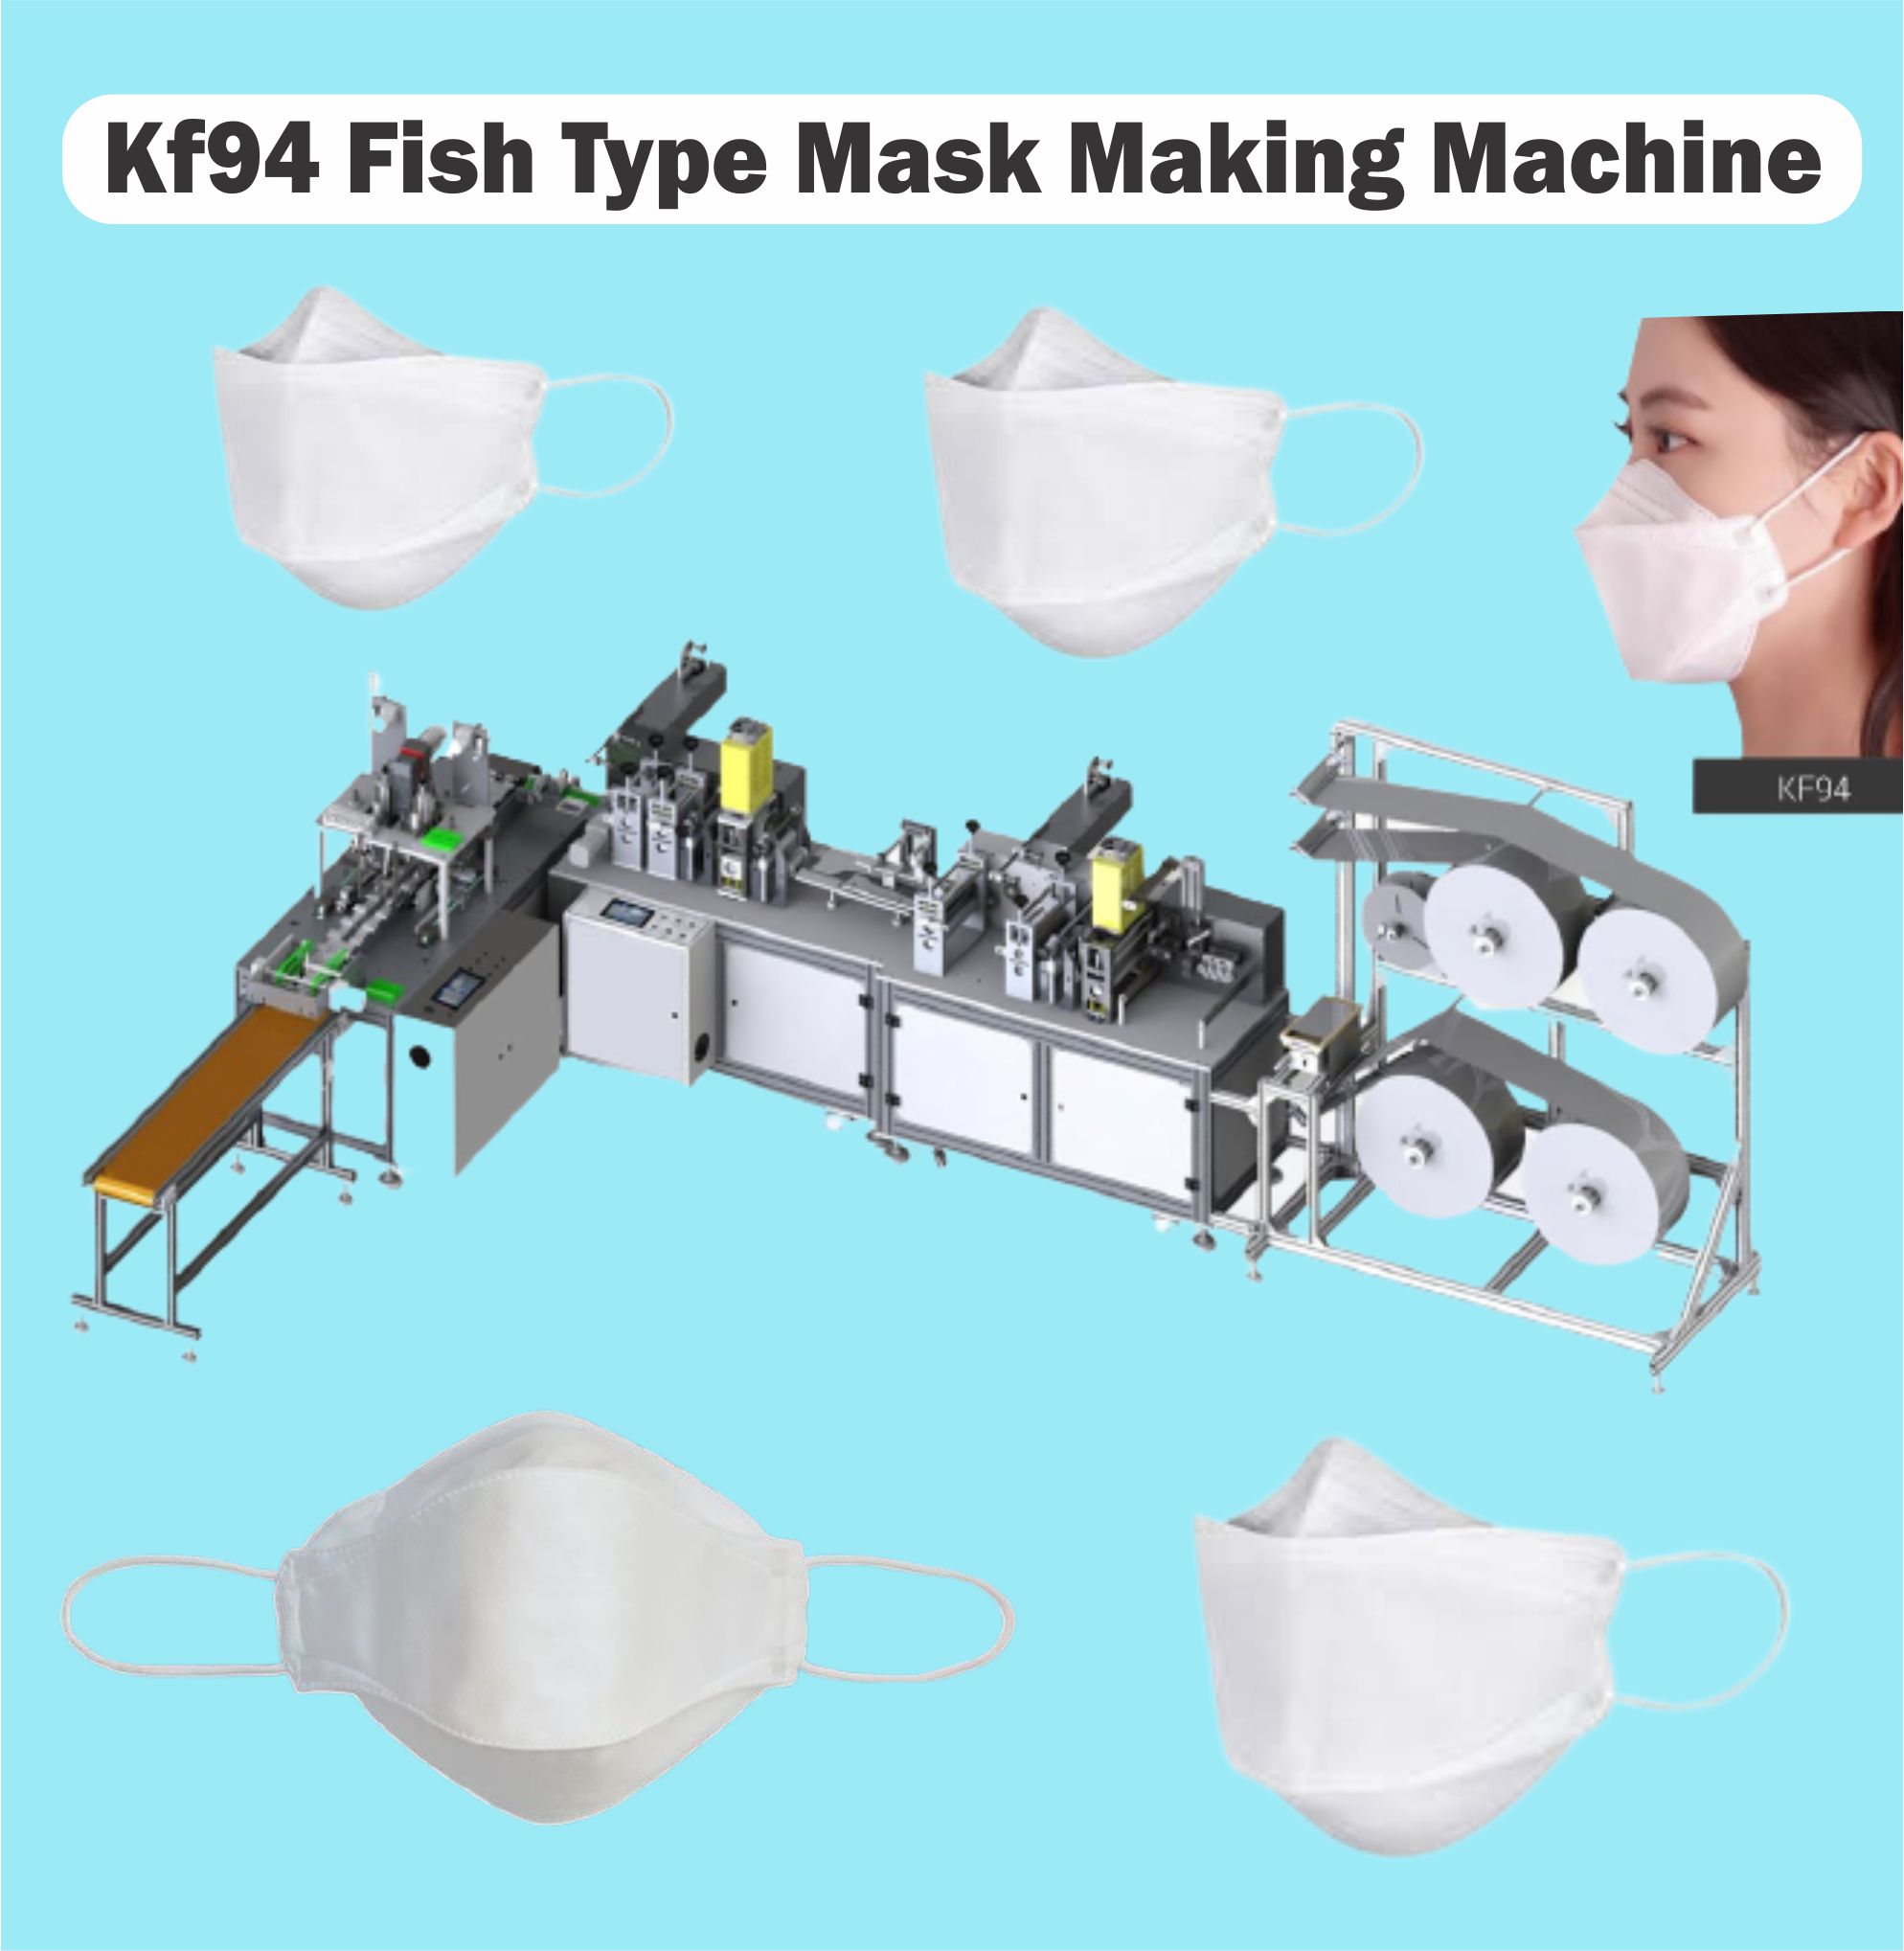 KF94 Fish Mask Making Machine